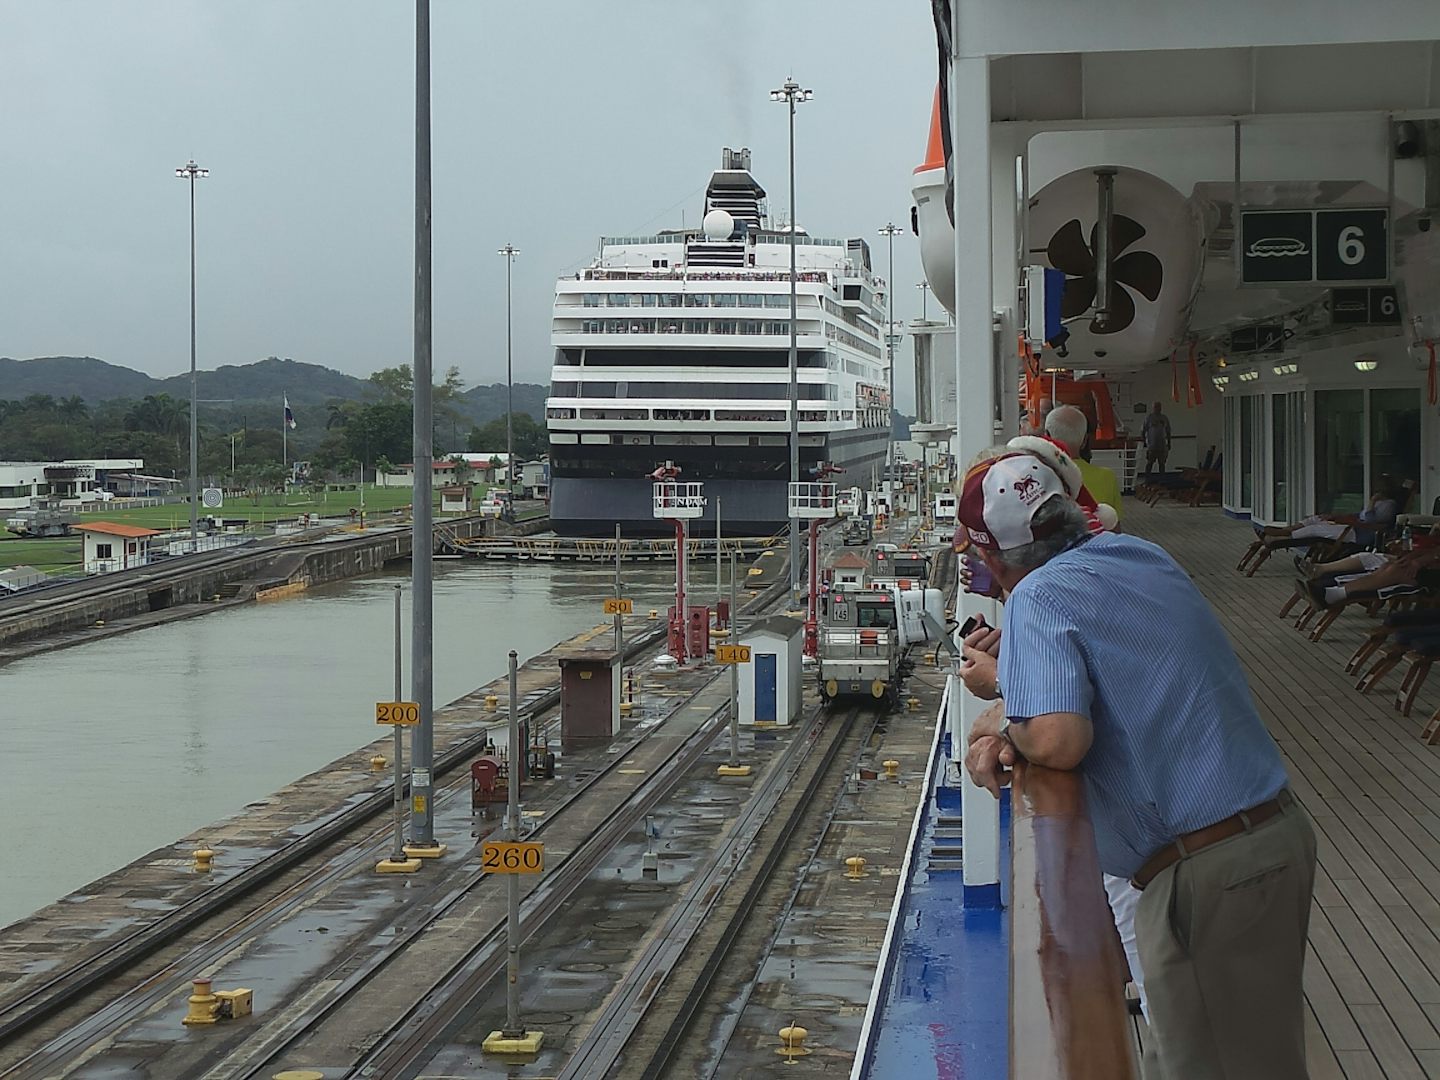 Veendam entering the Pedro Miguel Locks, Panama Canal just ahead of us.